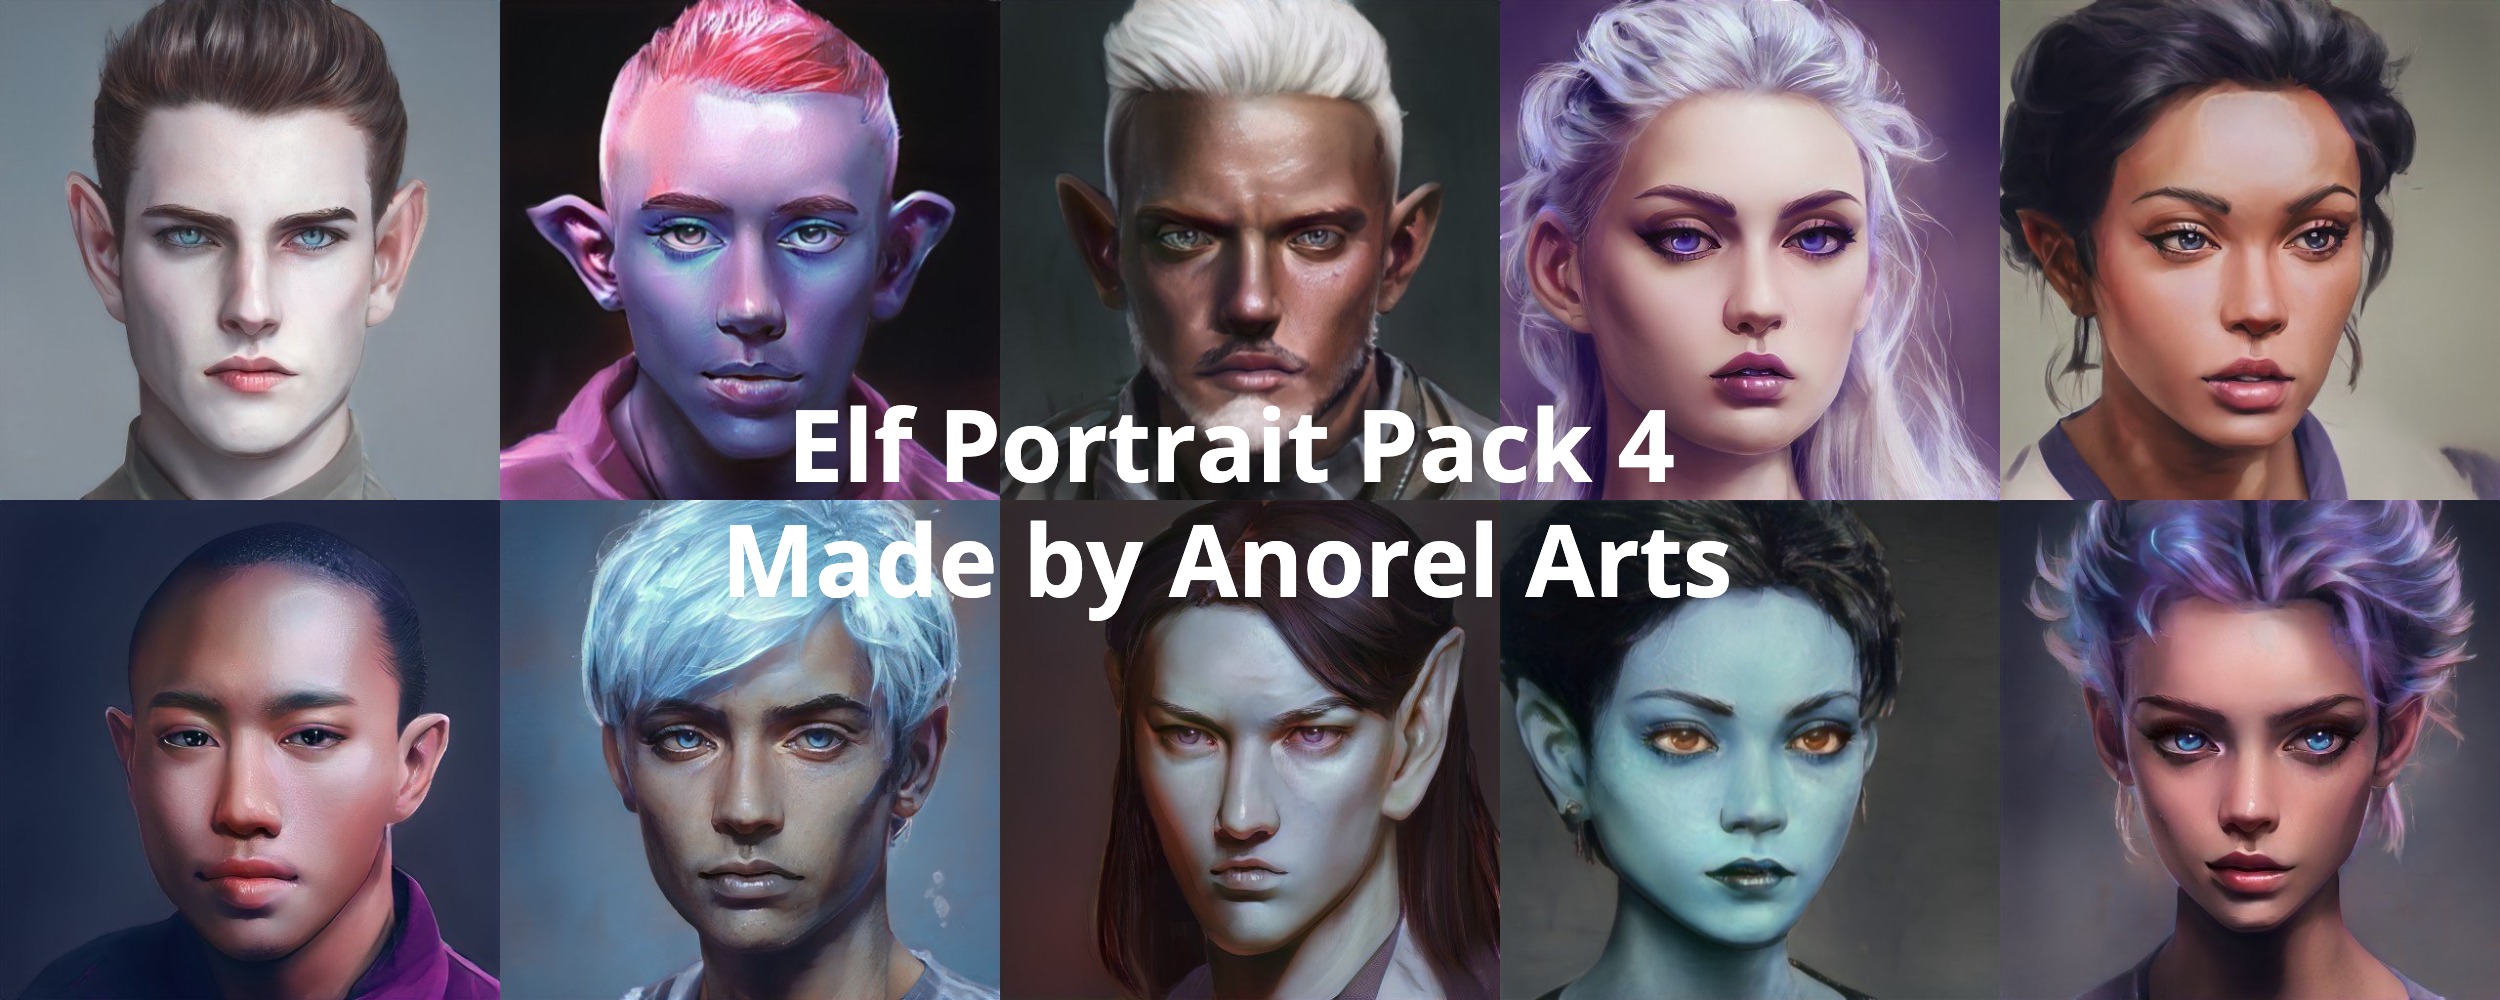 Elf Portrait Pack 4